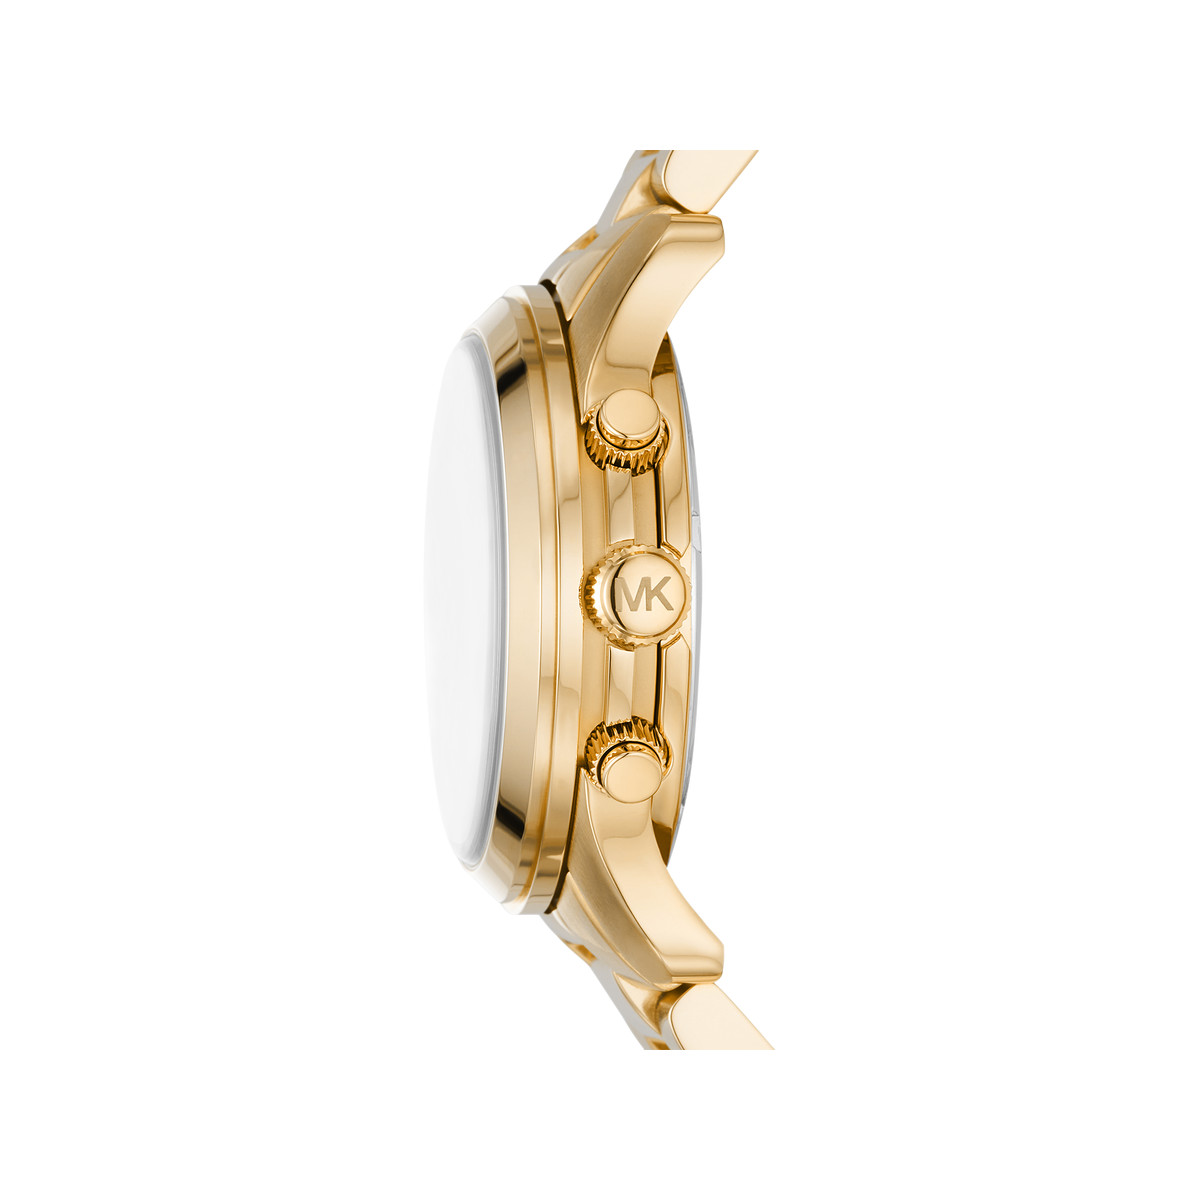 Montre MICHAEL KORS Runway femme bracelet acier inoxydable doré - vue 2